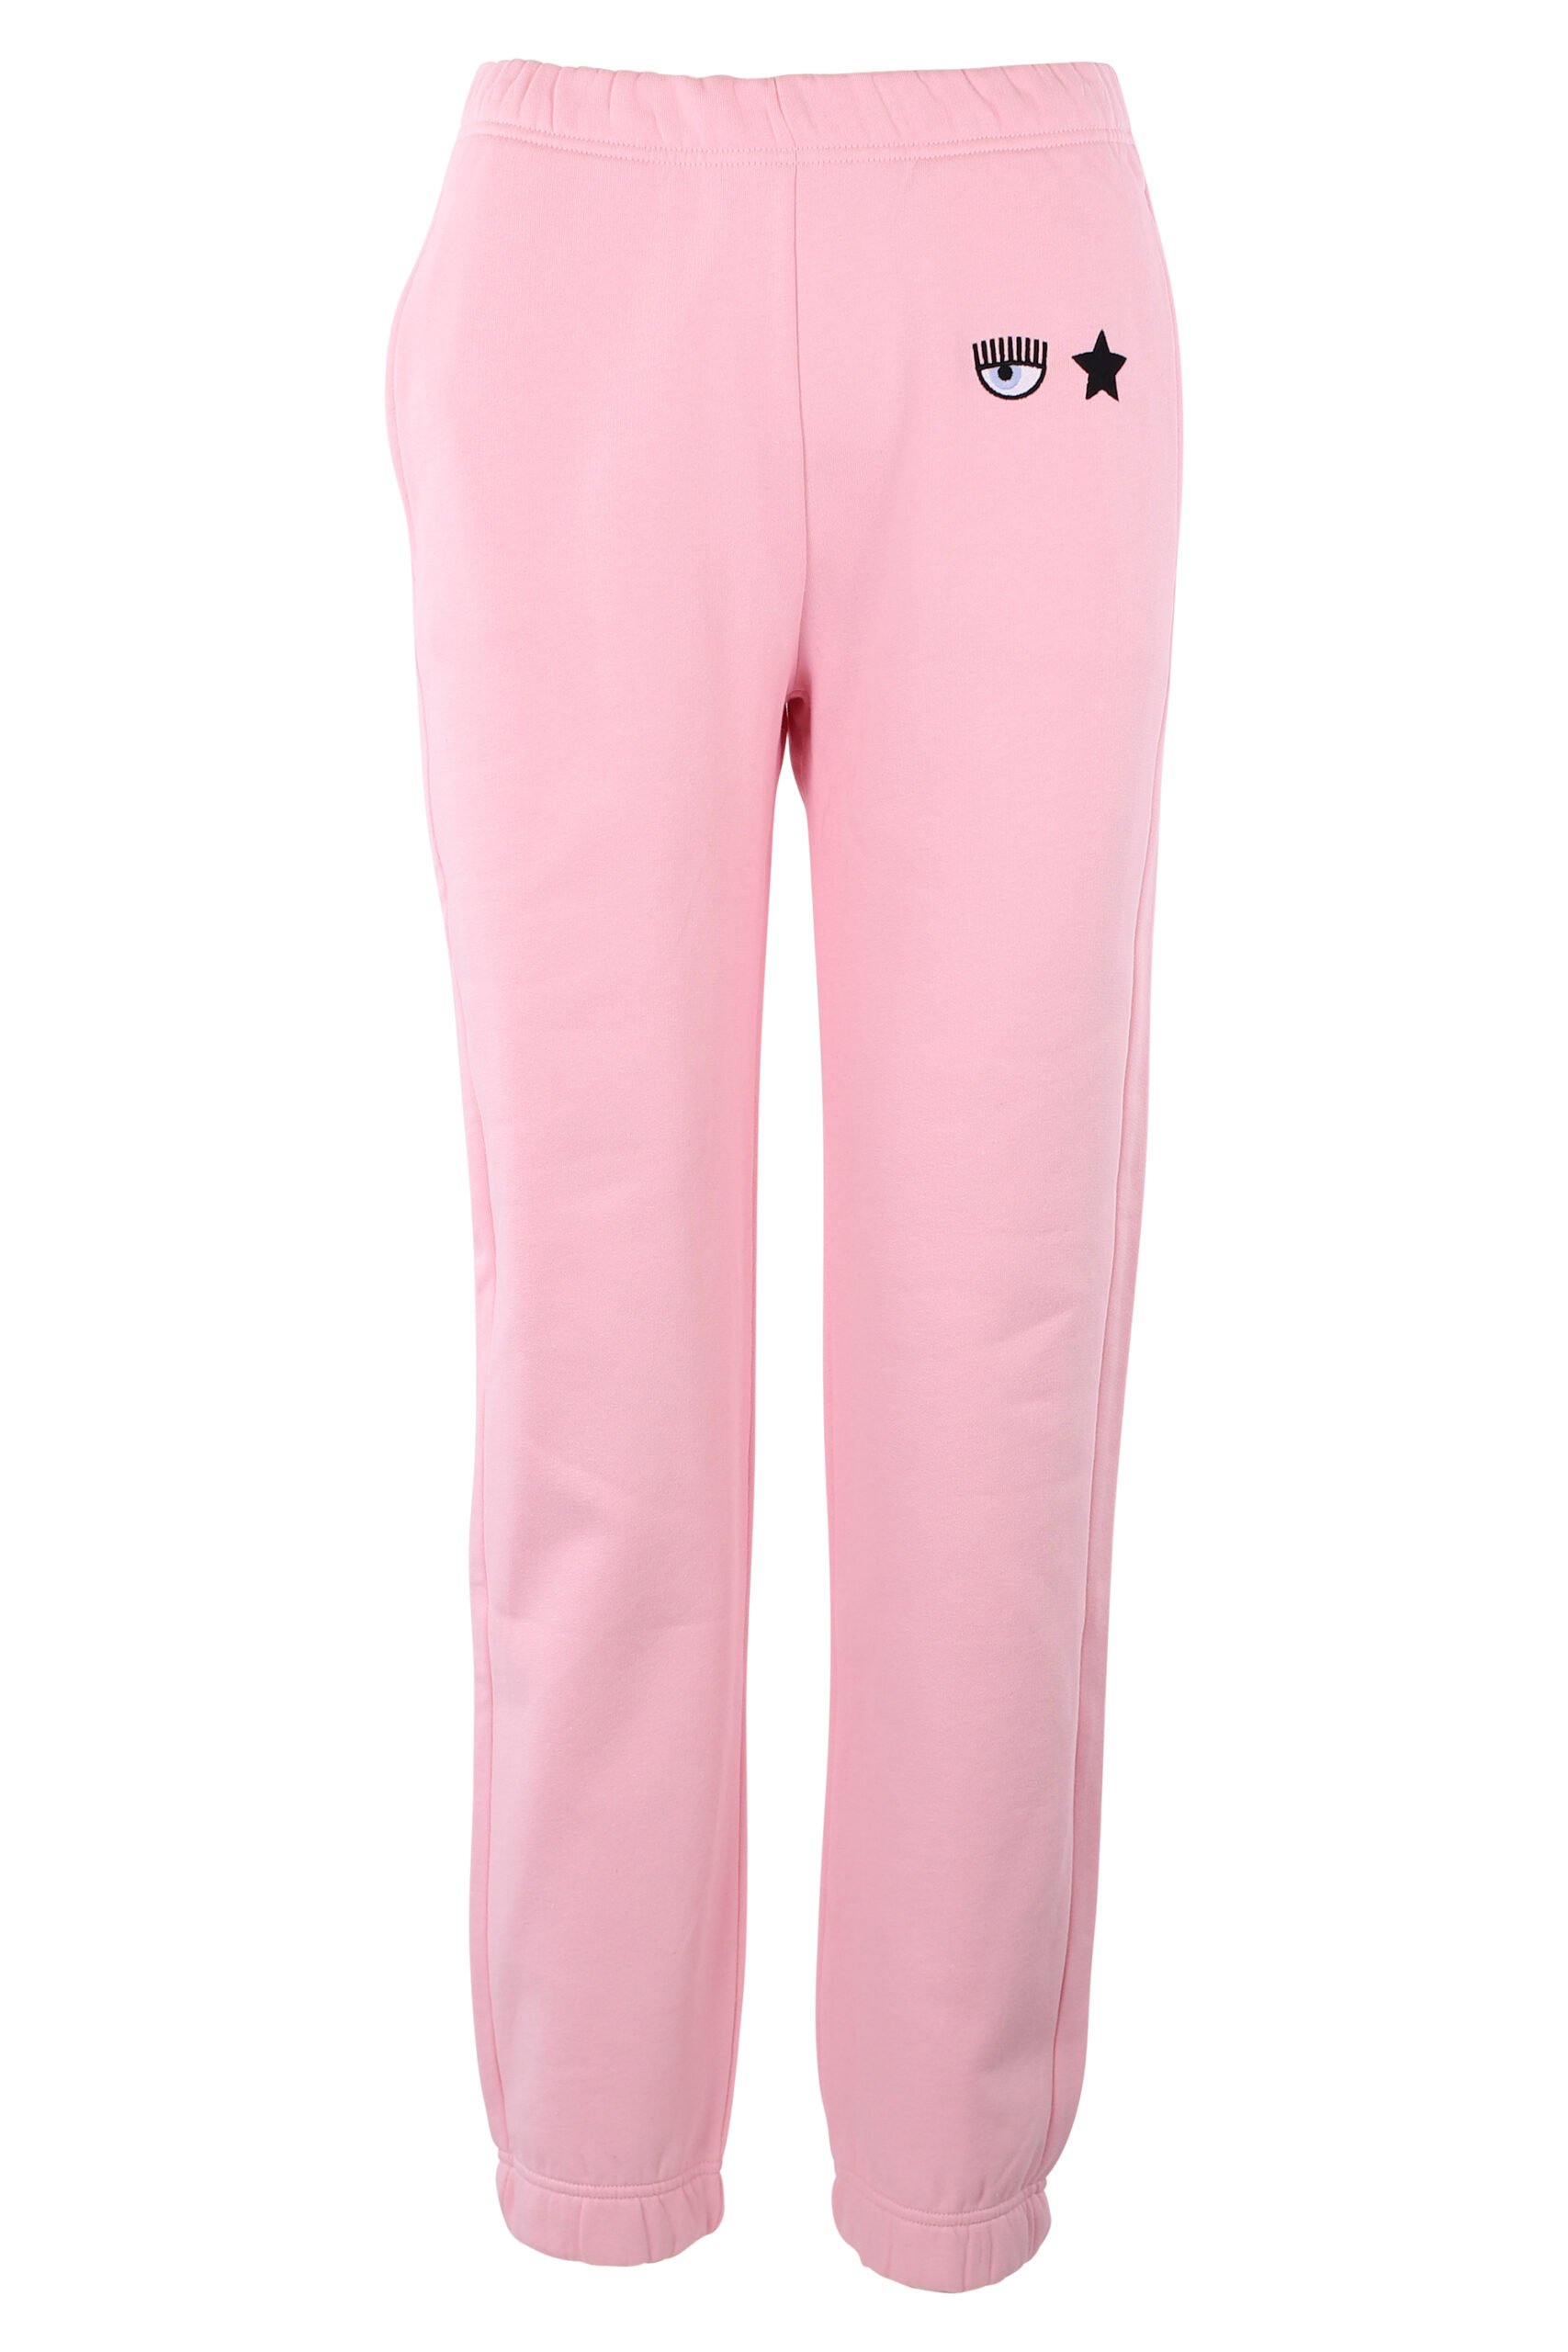 maleta contacto Dormitorio Chiara Ferragni - Pantalón de chándal rosa con logo ojo y estrella - BLS  Fashion